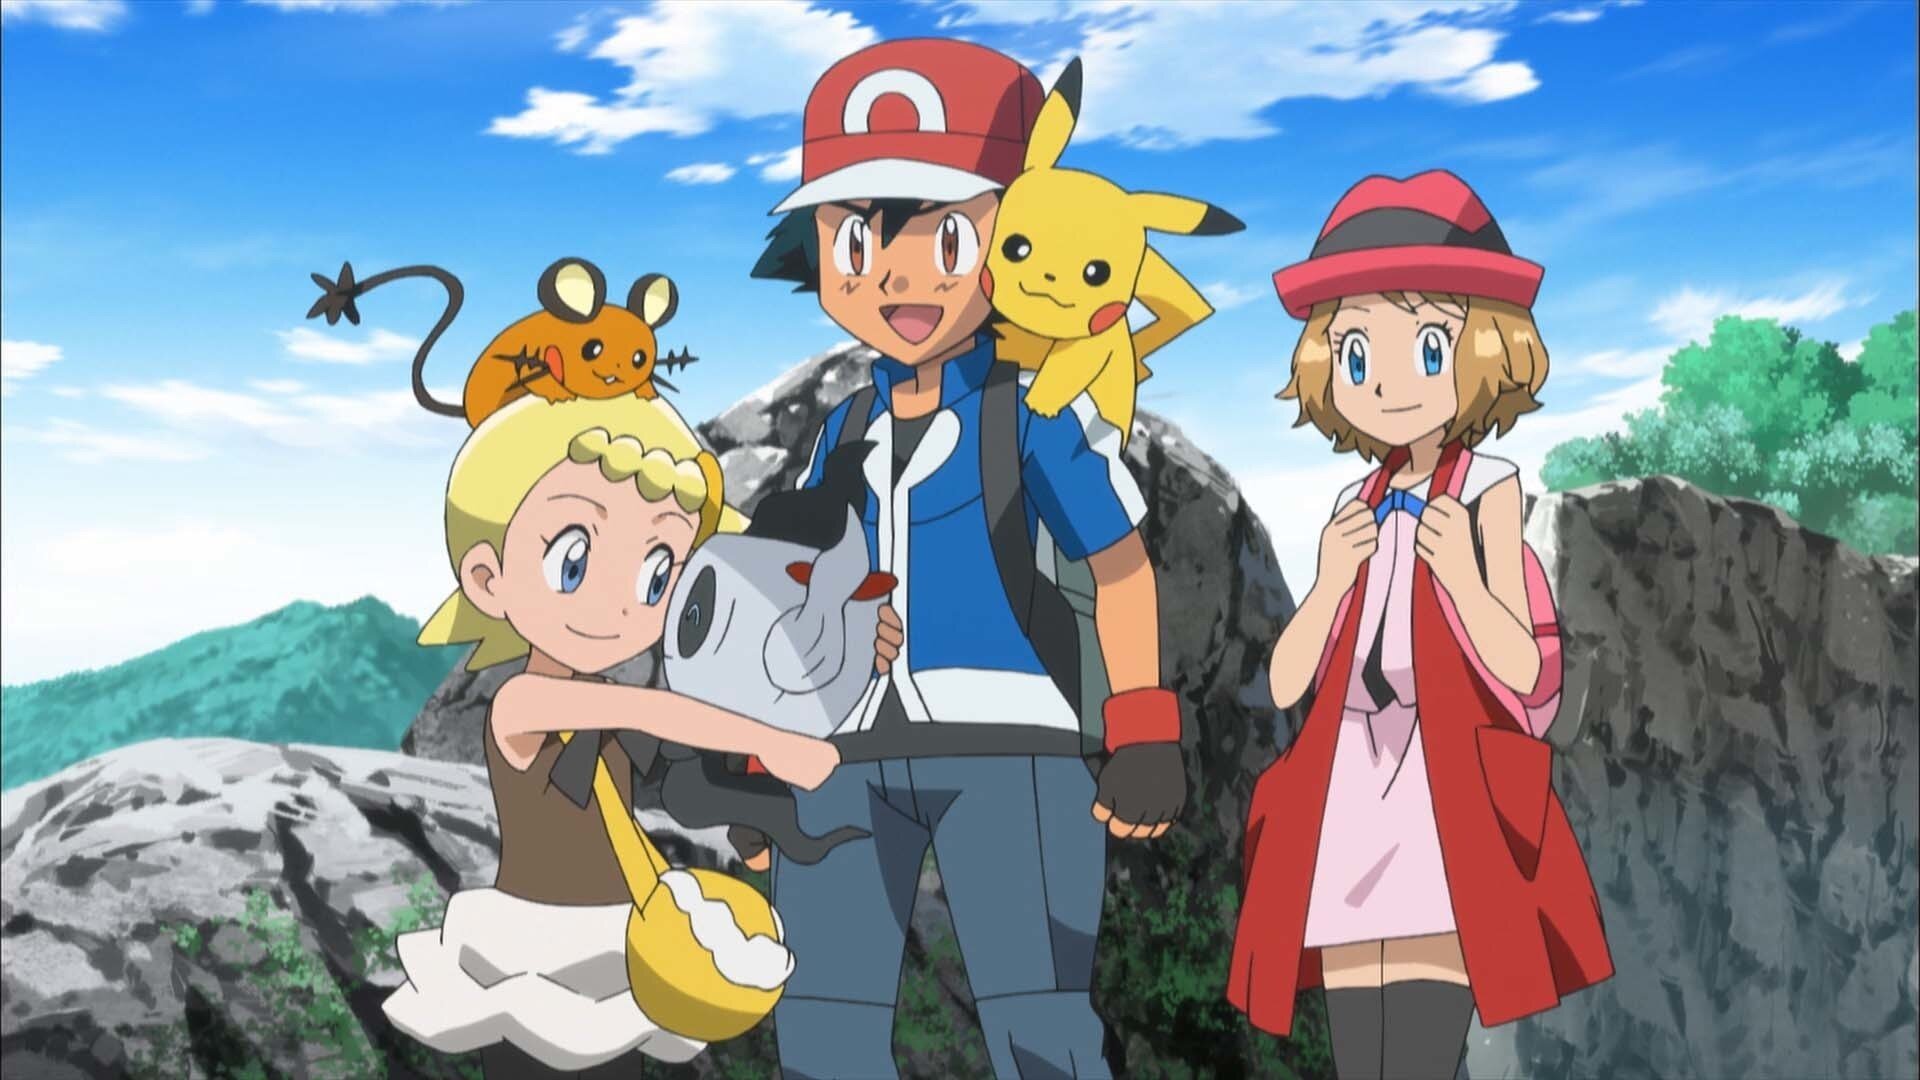 Watch Pokémon season 19 episode 37 streaming online